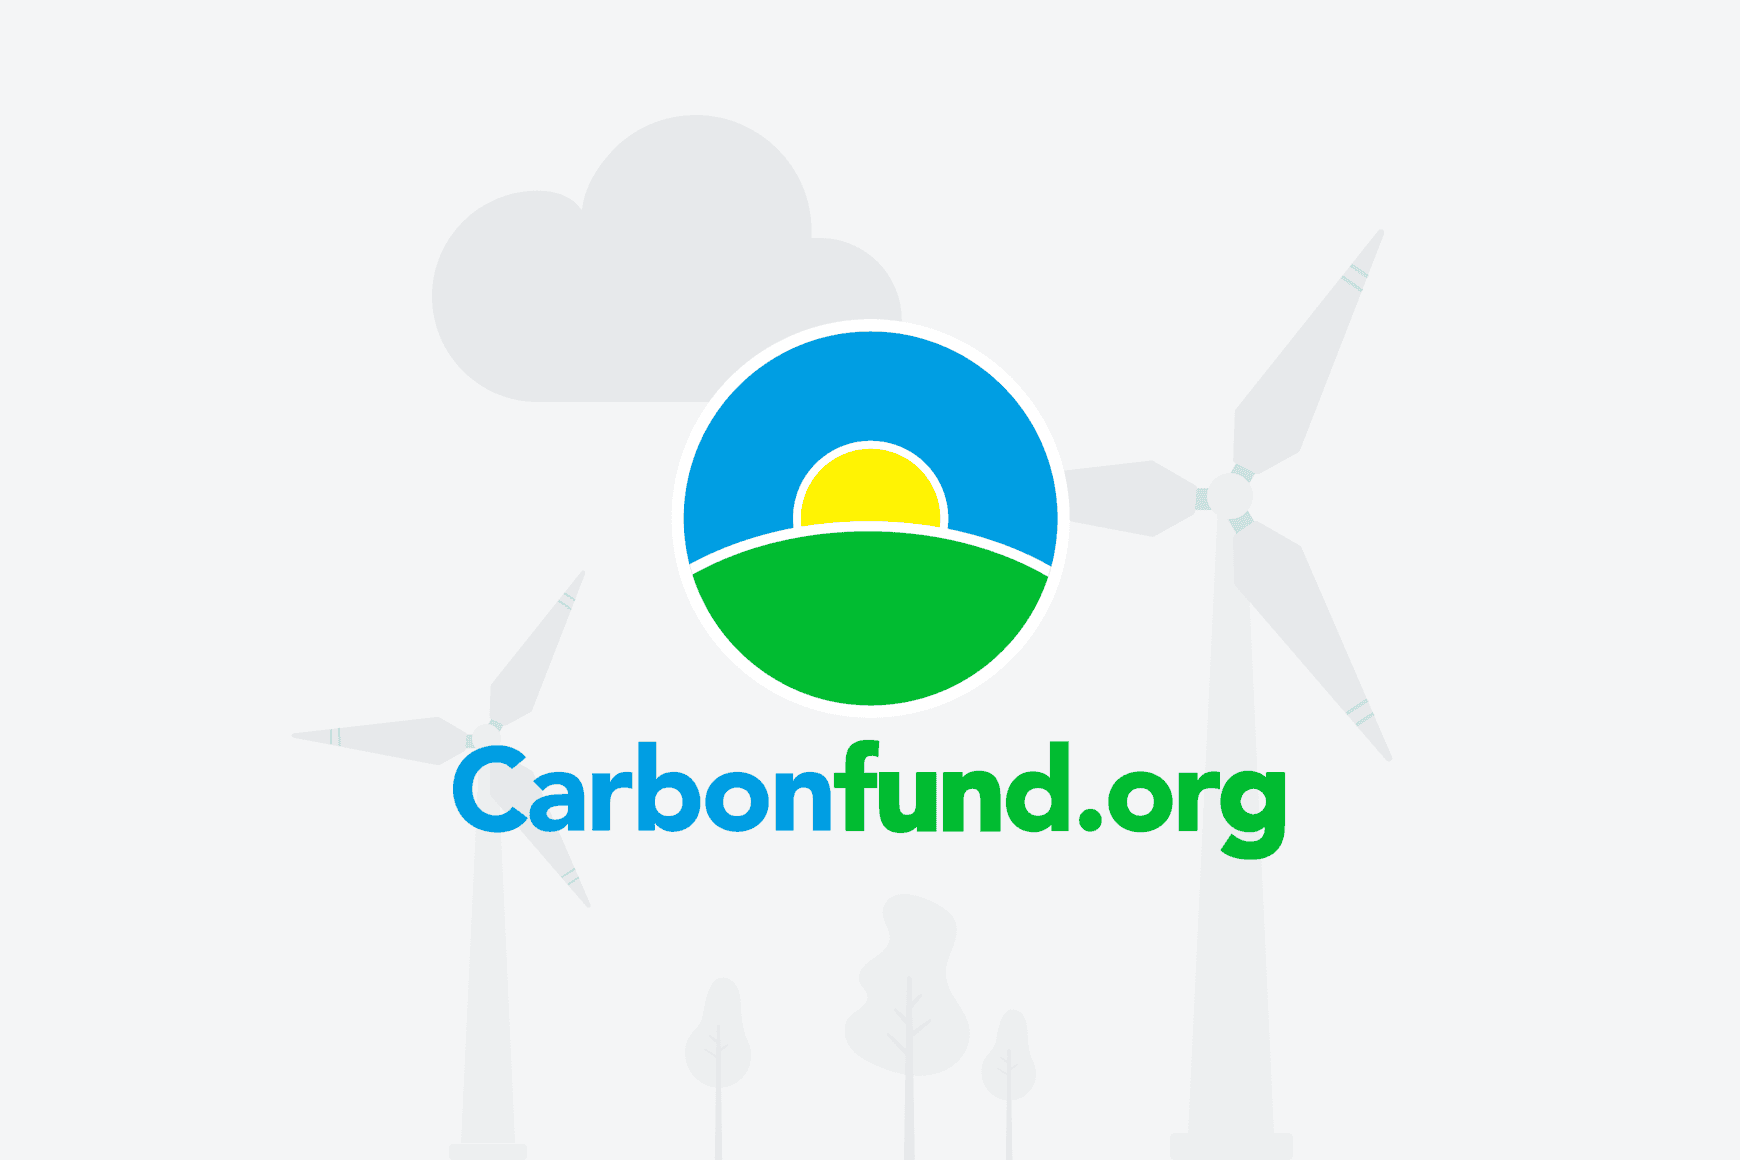 Carbon Fund Org